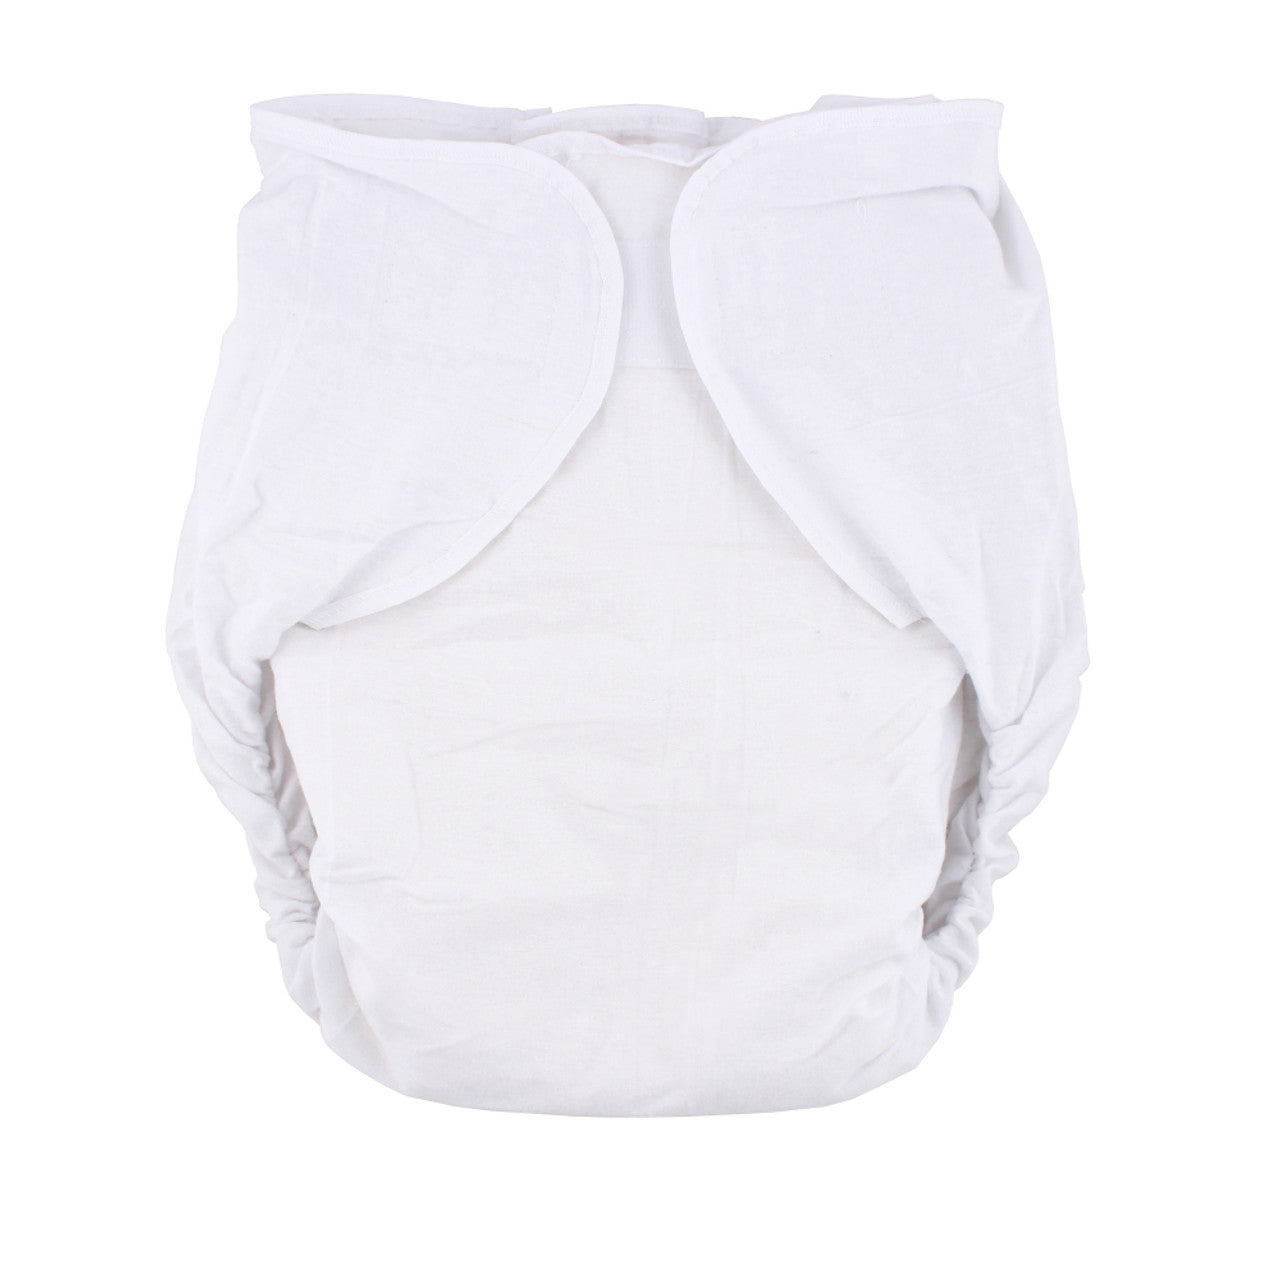 InControl - Omutsu Bulky Cloth Nighttime Diaper - White